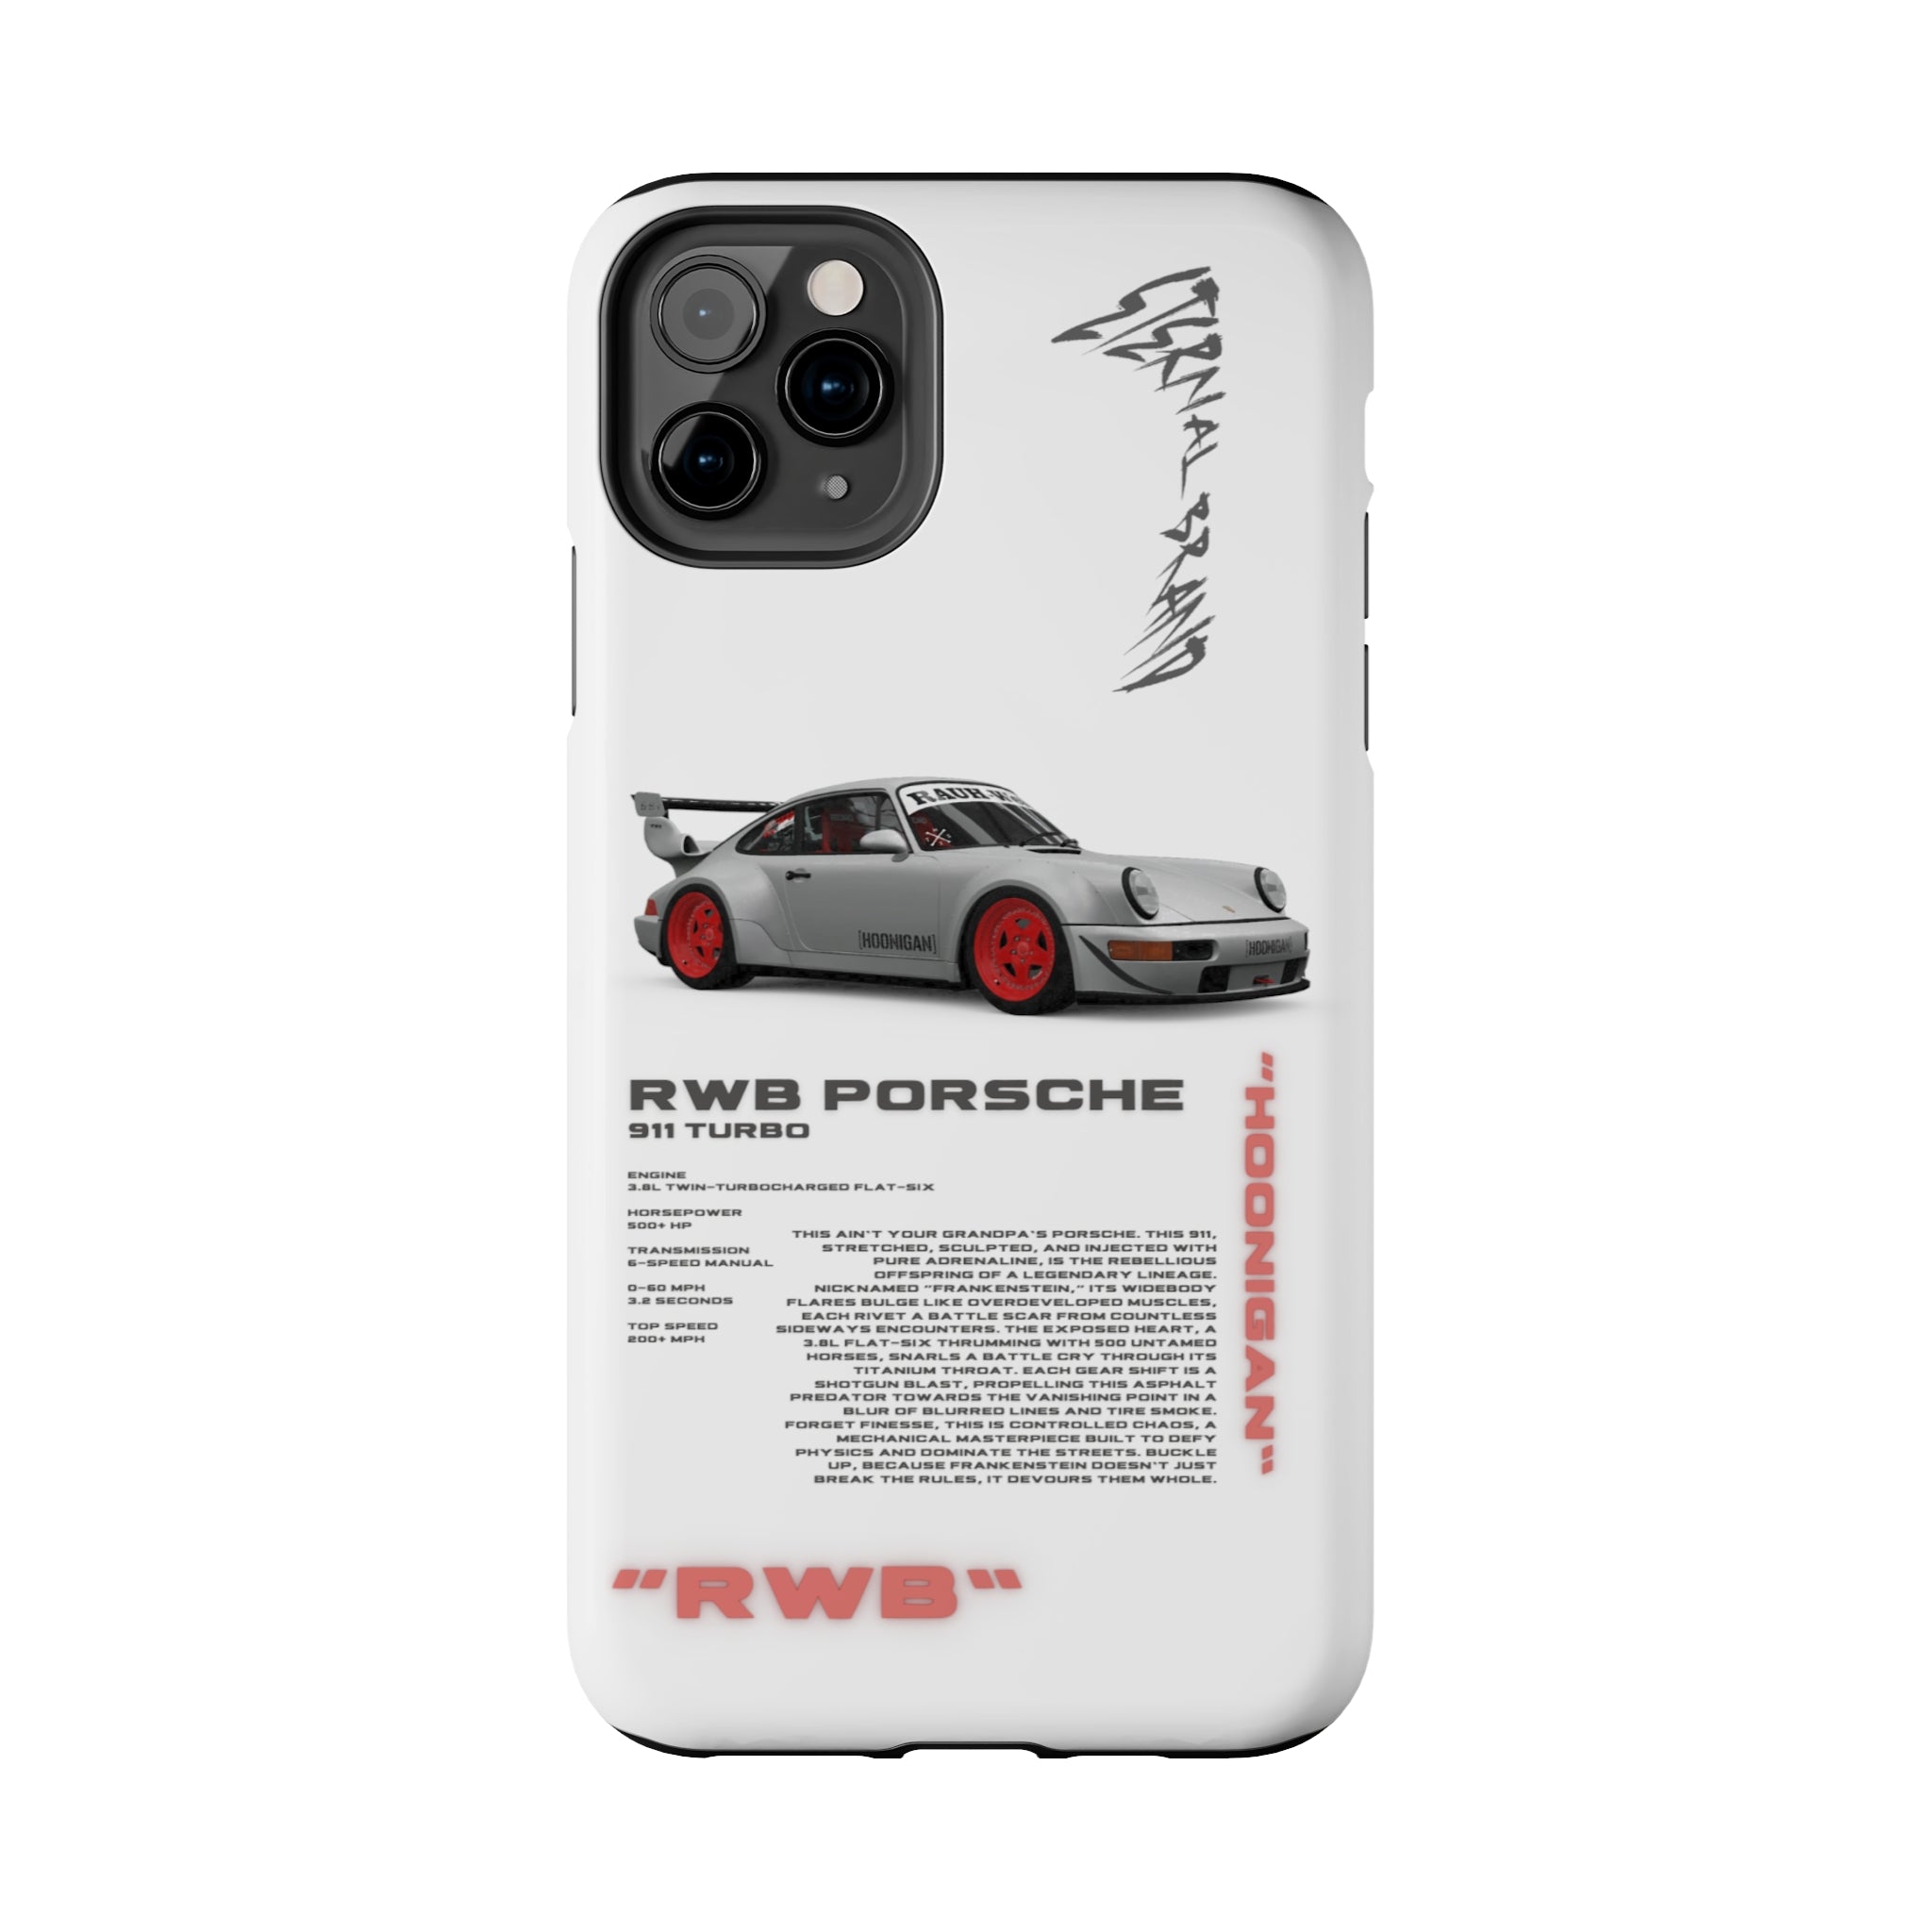 RWB Porsche 911 Turbo "GreyScale"